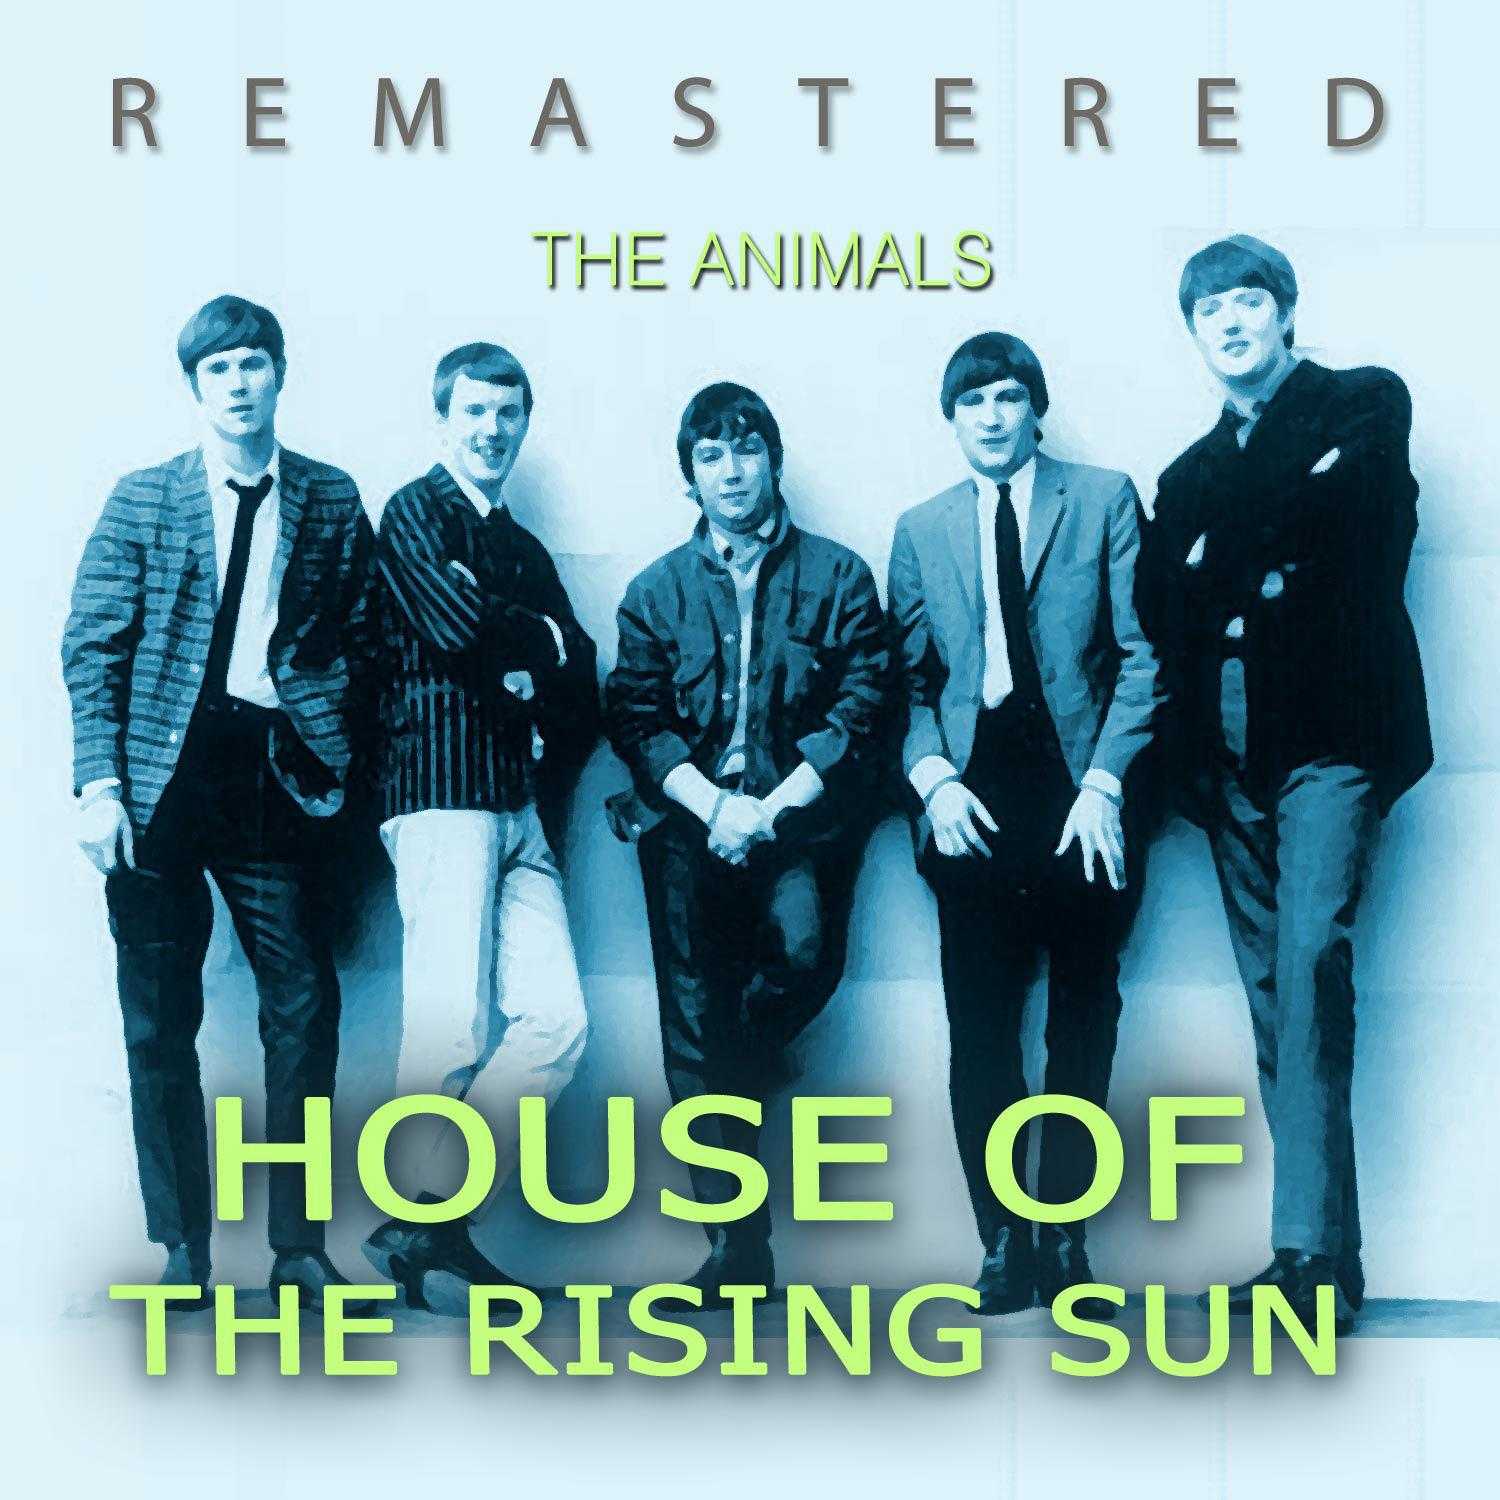 Песня me house. Animals the House of the Rising Sun альбом. The animals House of the Rising Sun обложка. Animal House. Группа the animals дом восходящего солнца.